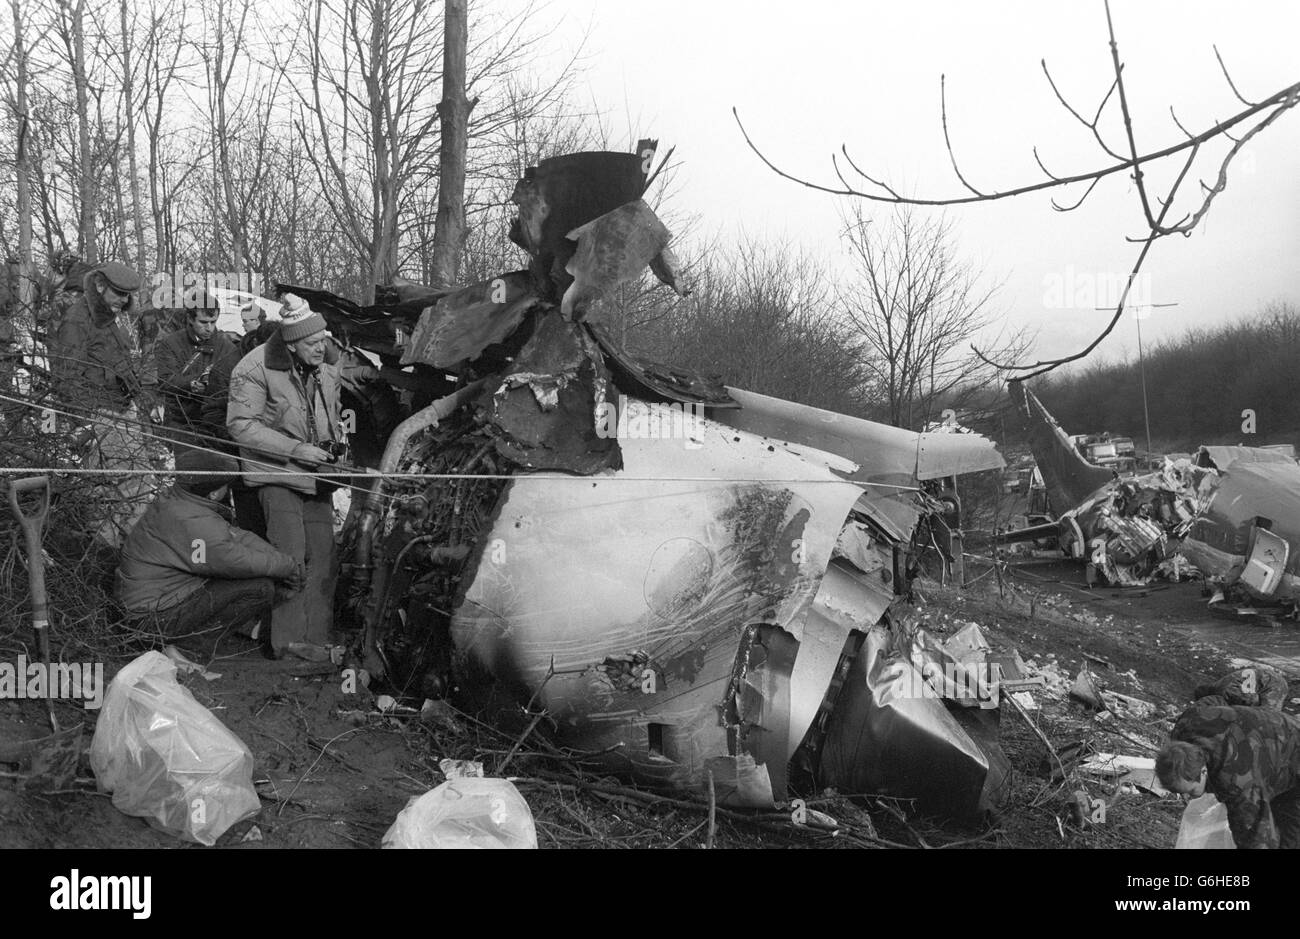 Crash investigators examine the crashed Boeing's fire-damaged left engine on the M1 motorway near Kegworth, Leicestershire. Stock Photo